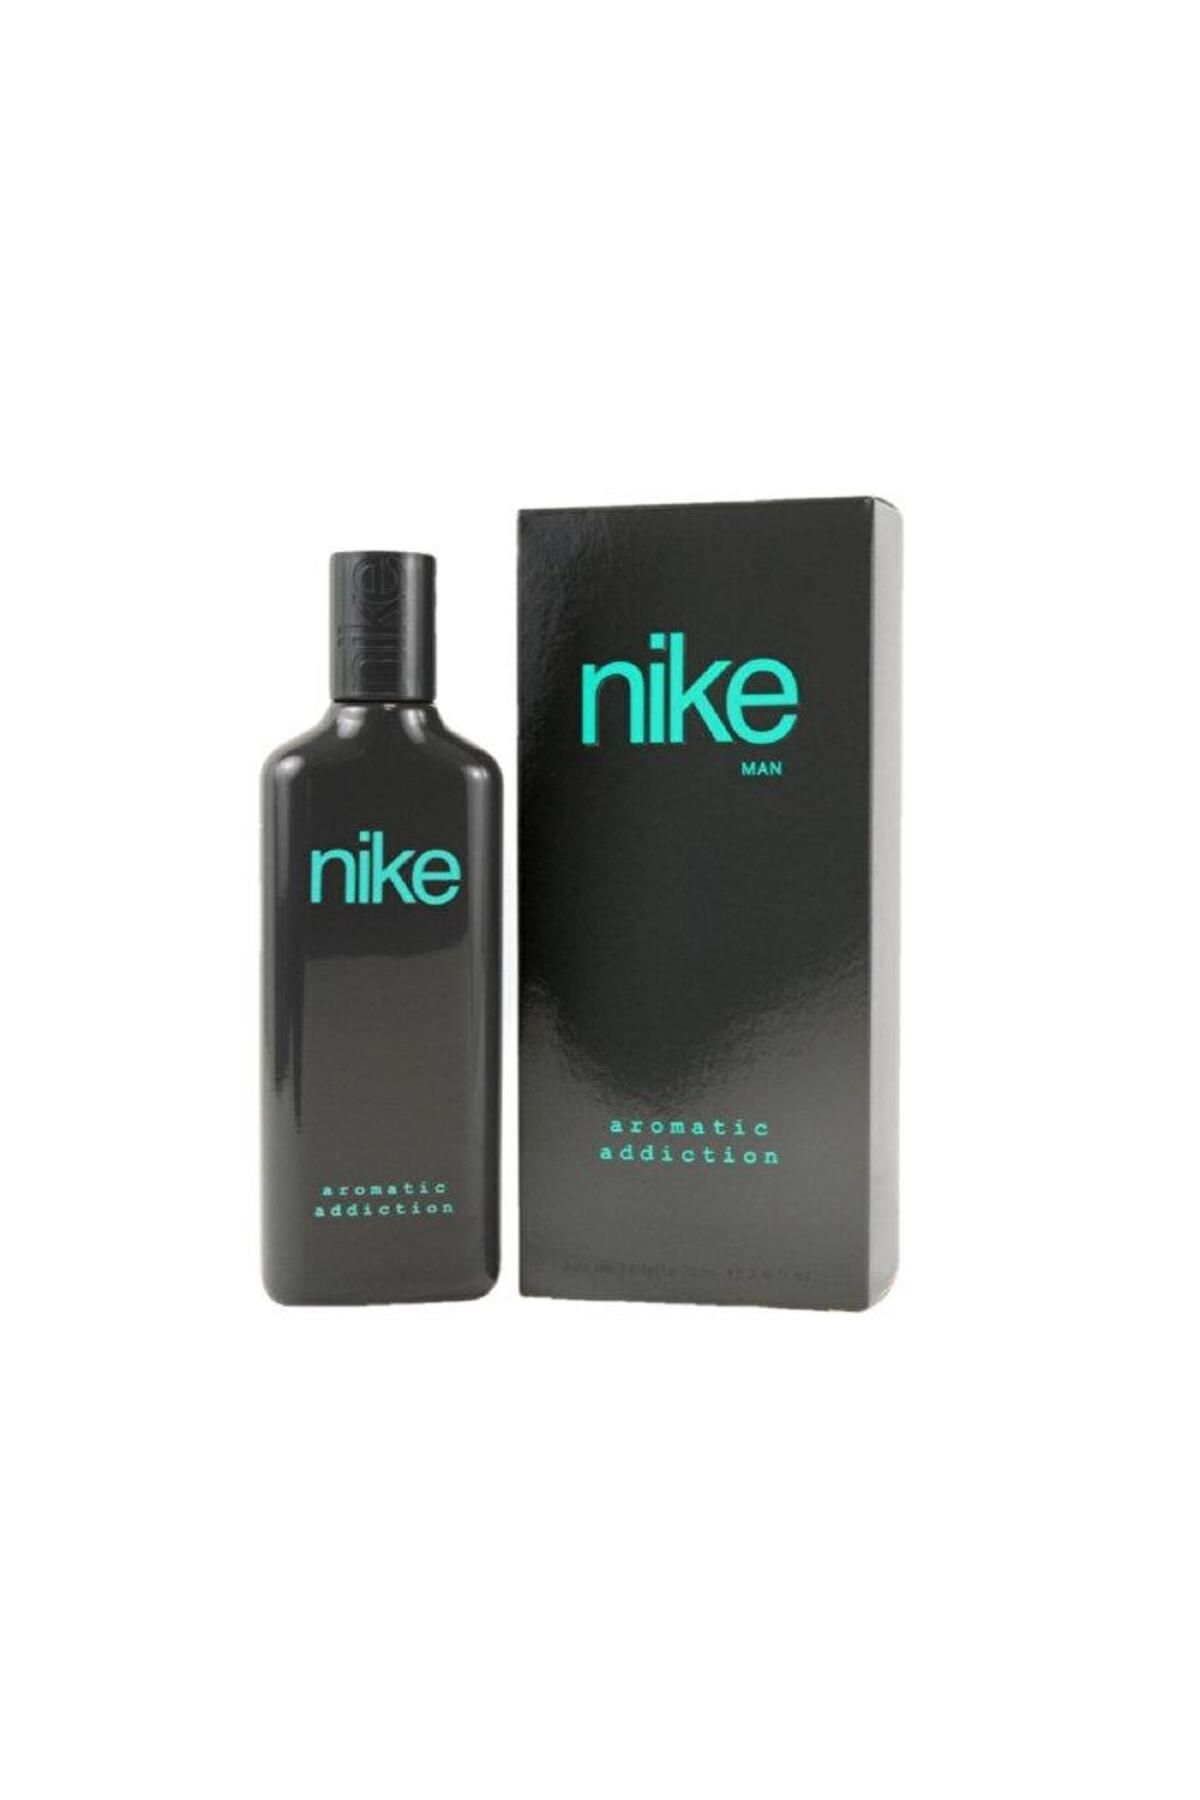 Nike Aromatic Addition Erkek Parfümü Edt 75 Ml